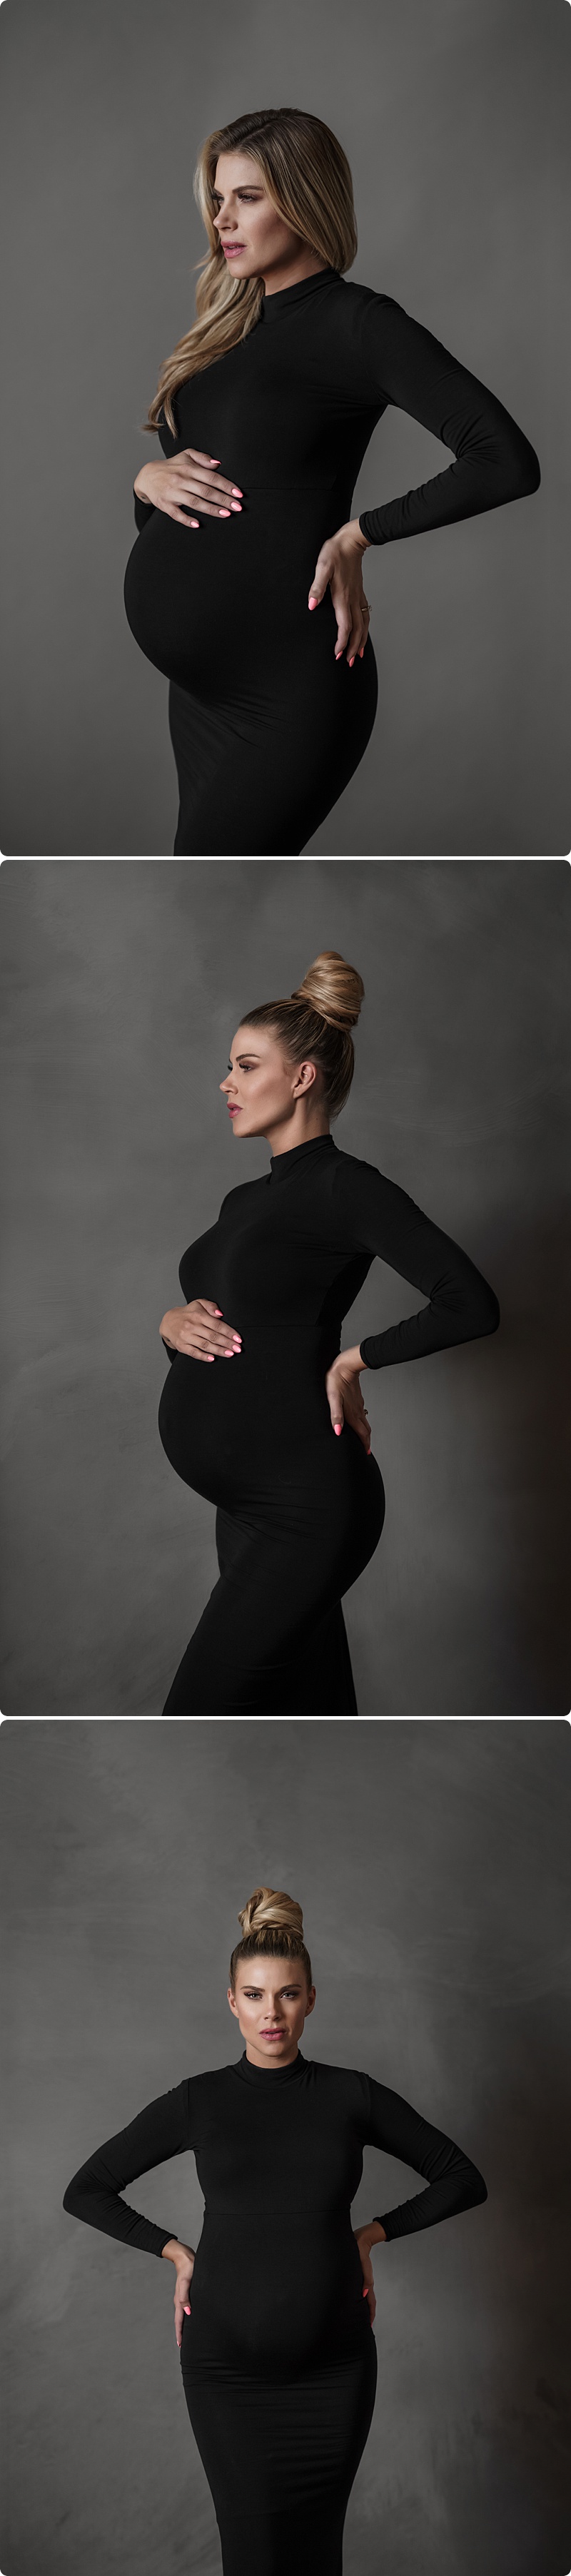 Beka Price Photography,Lifestyle,bppmamas,celebrity maternity,in-home maternity,intimate maternity,lifestyle maternity,maternity,maternity lifestyle,maternity session,model maternity,